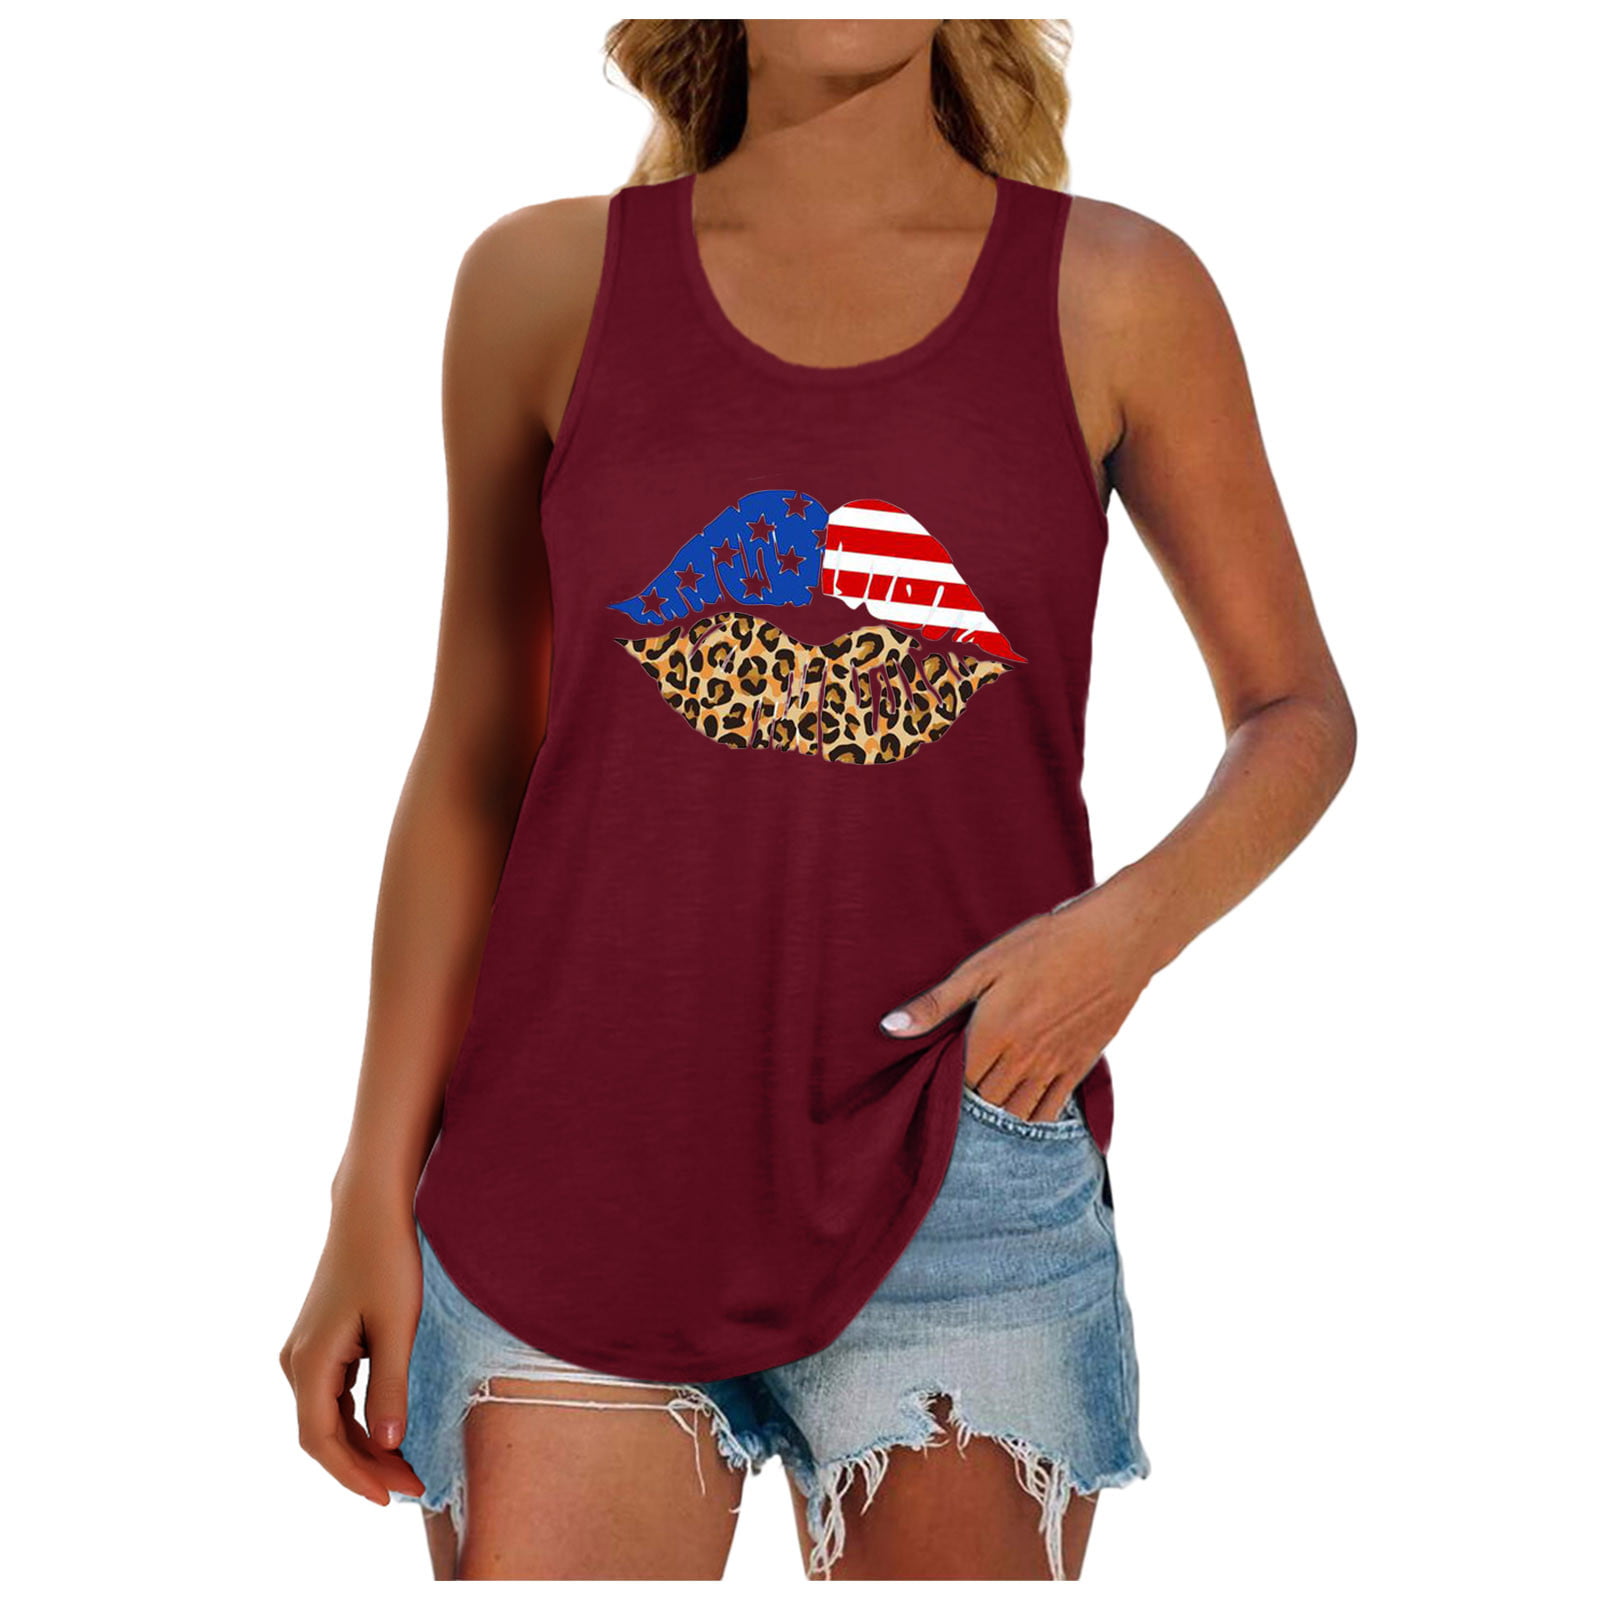 NEEKEY Womens Summer Sleeveless Tank Tops Tie Dye Printed Cut Out Keyhole Back Tank Tops Shirts Blouses Vest